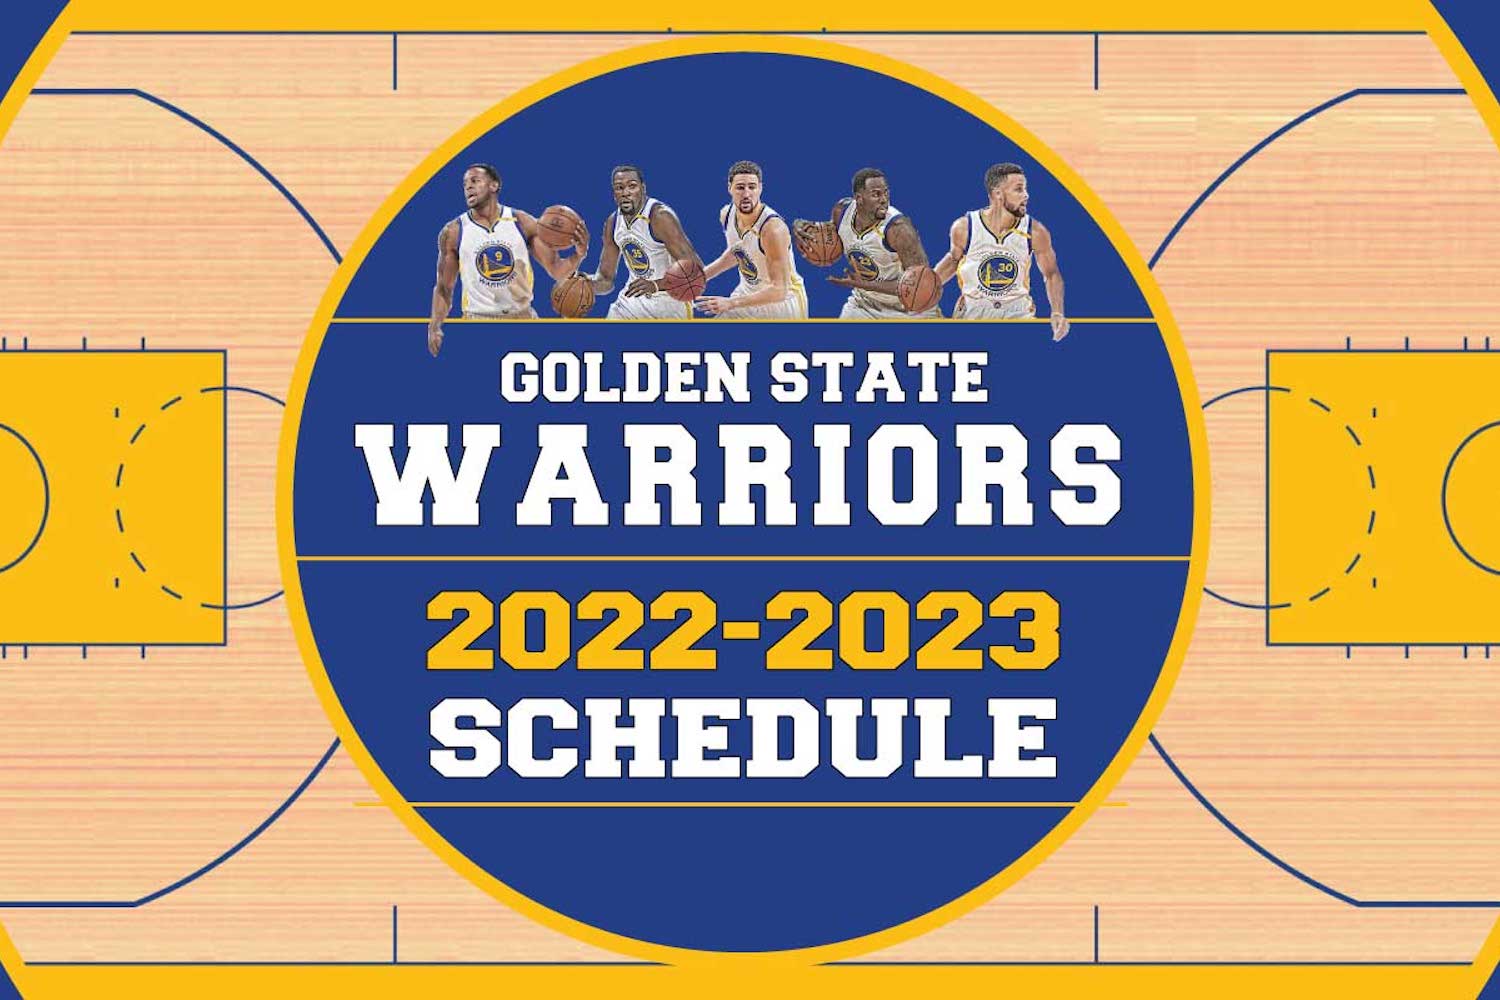 Warriors schedule: Top 9 games from the 2022-23 NBA season